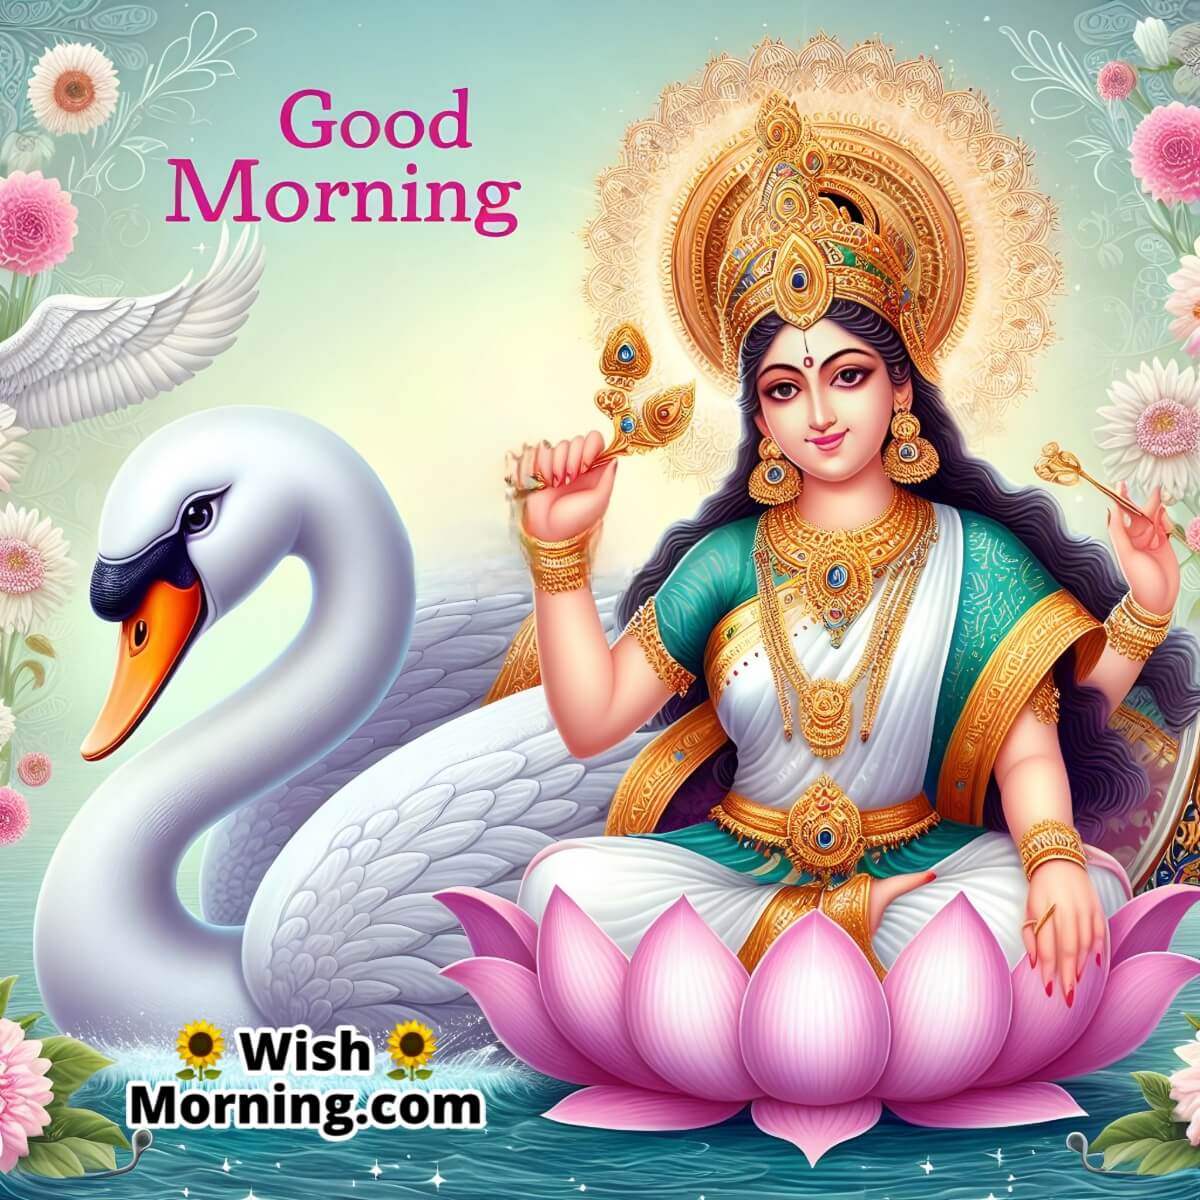 Enlightened Mornings With Goddess Saraswati